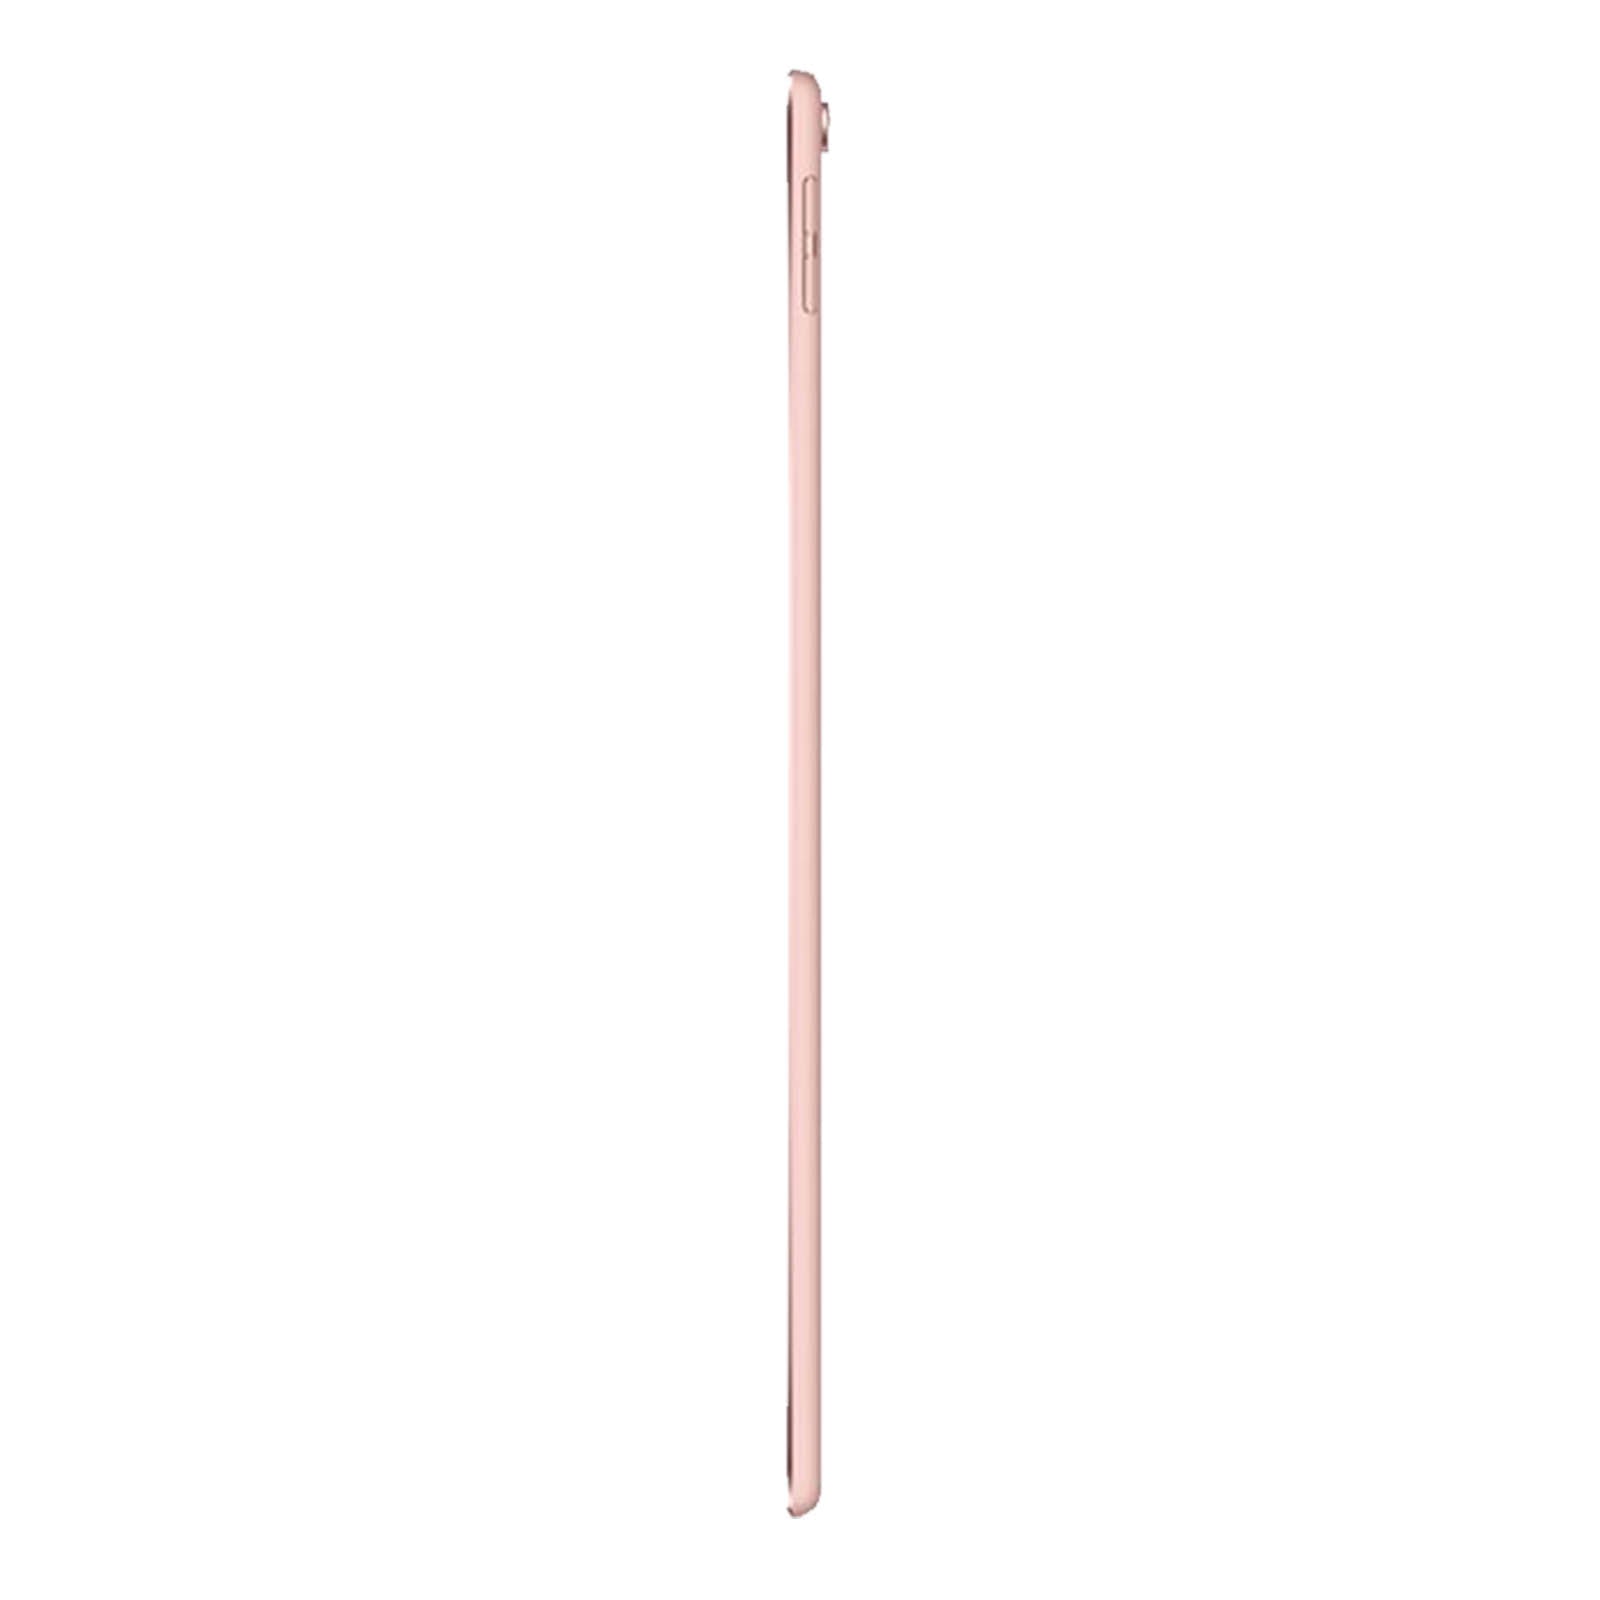 iPad Pro 10.5 Inch 64GB Rose Gold Pristine - WiFi